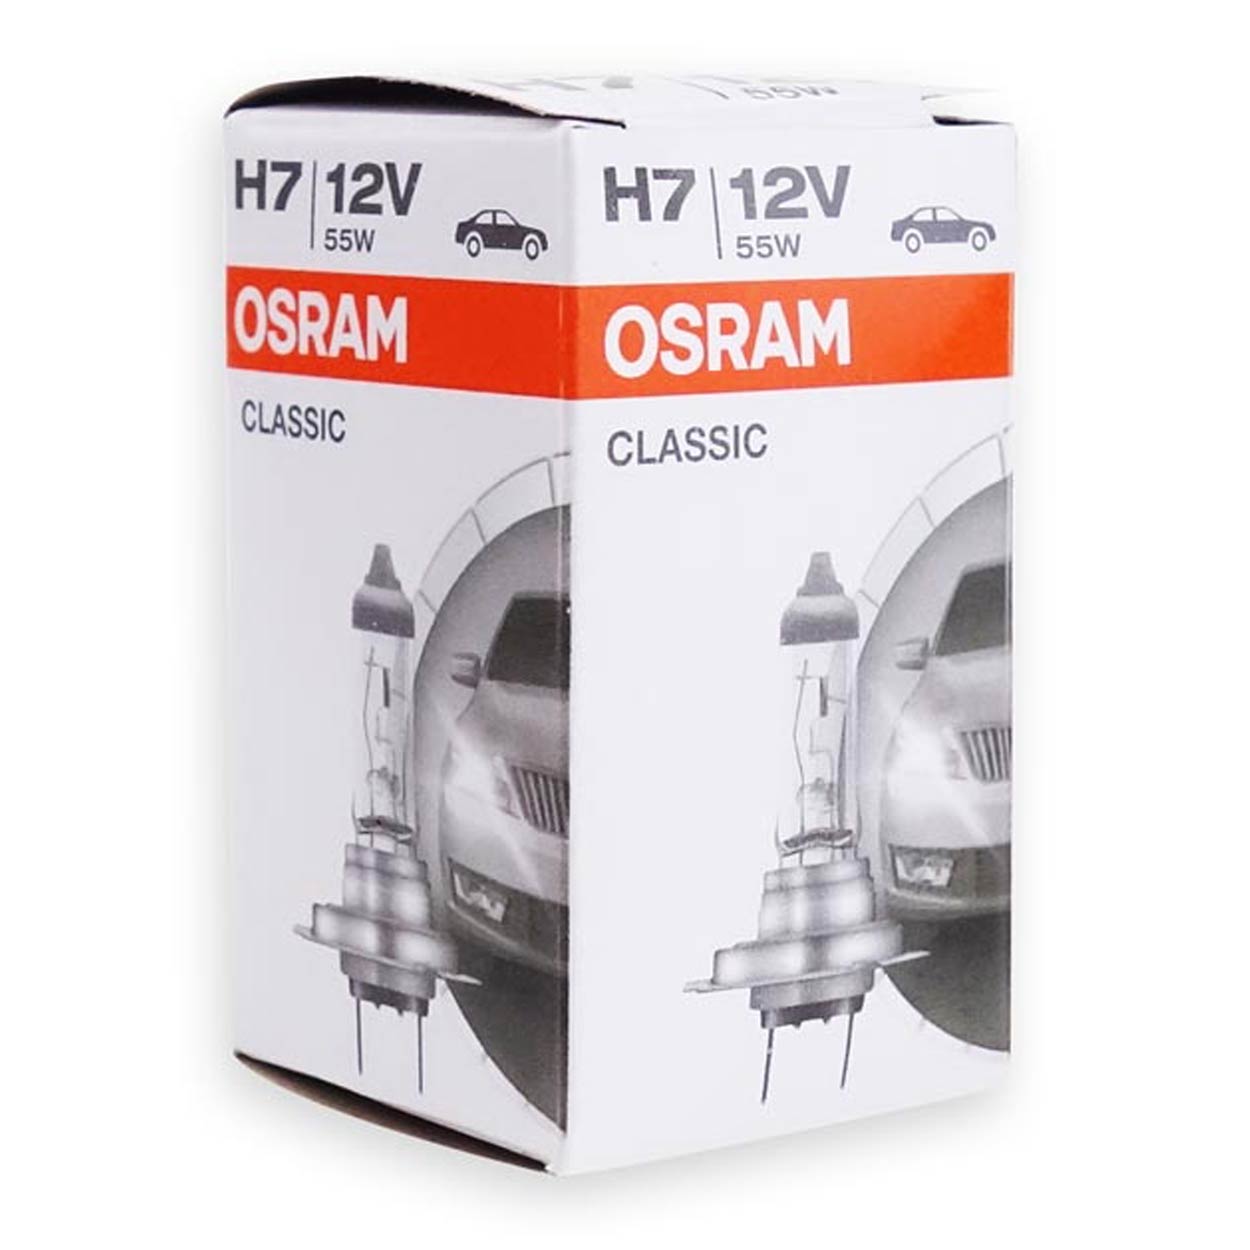 Buy Osram Car Headlight Bulb / 12v 55w H7 / Most Popular Wholesale & Retail